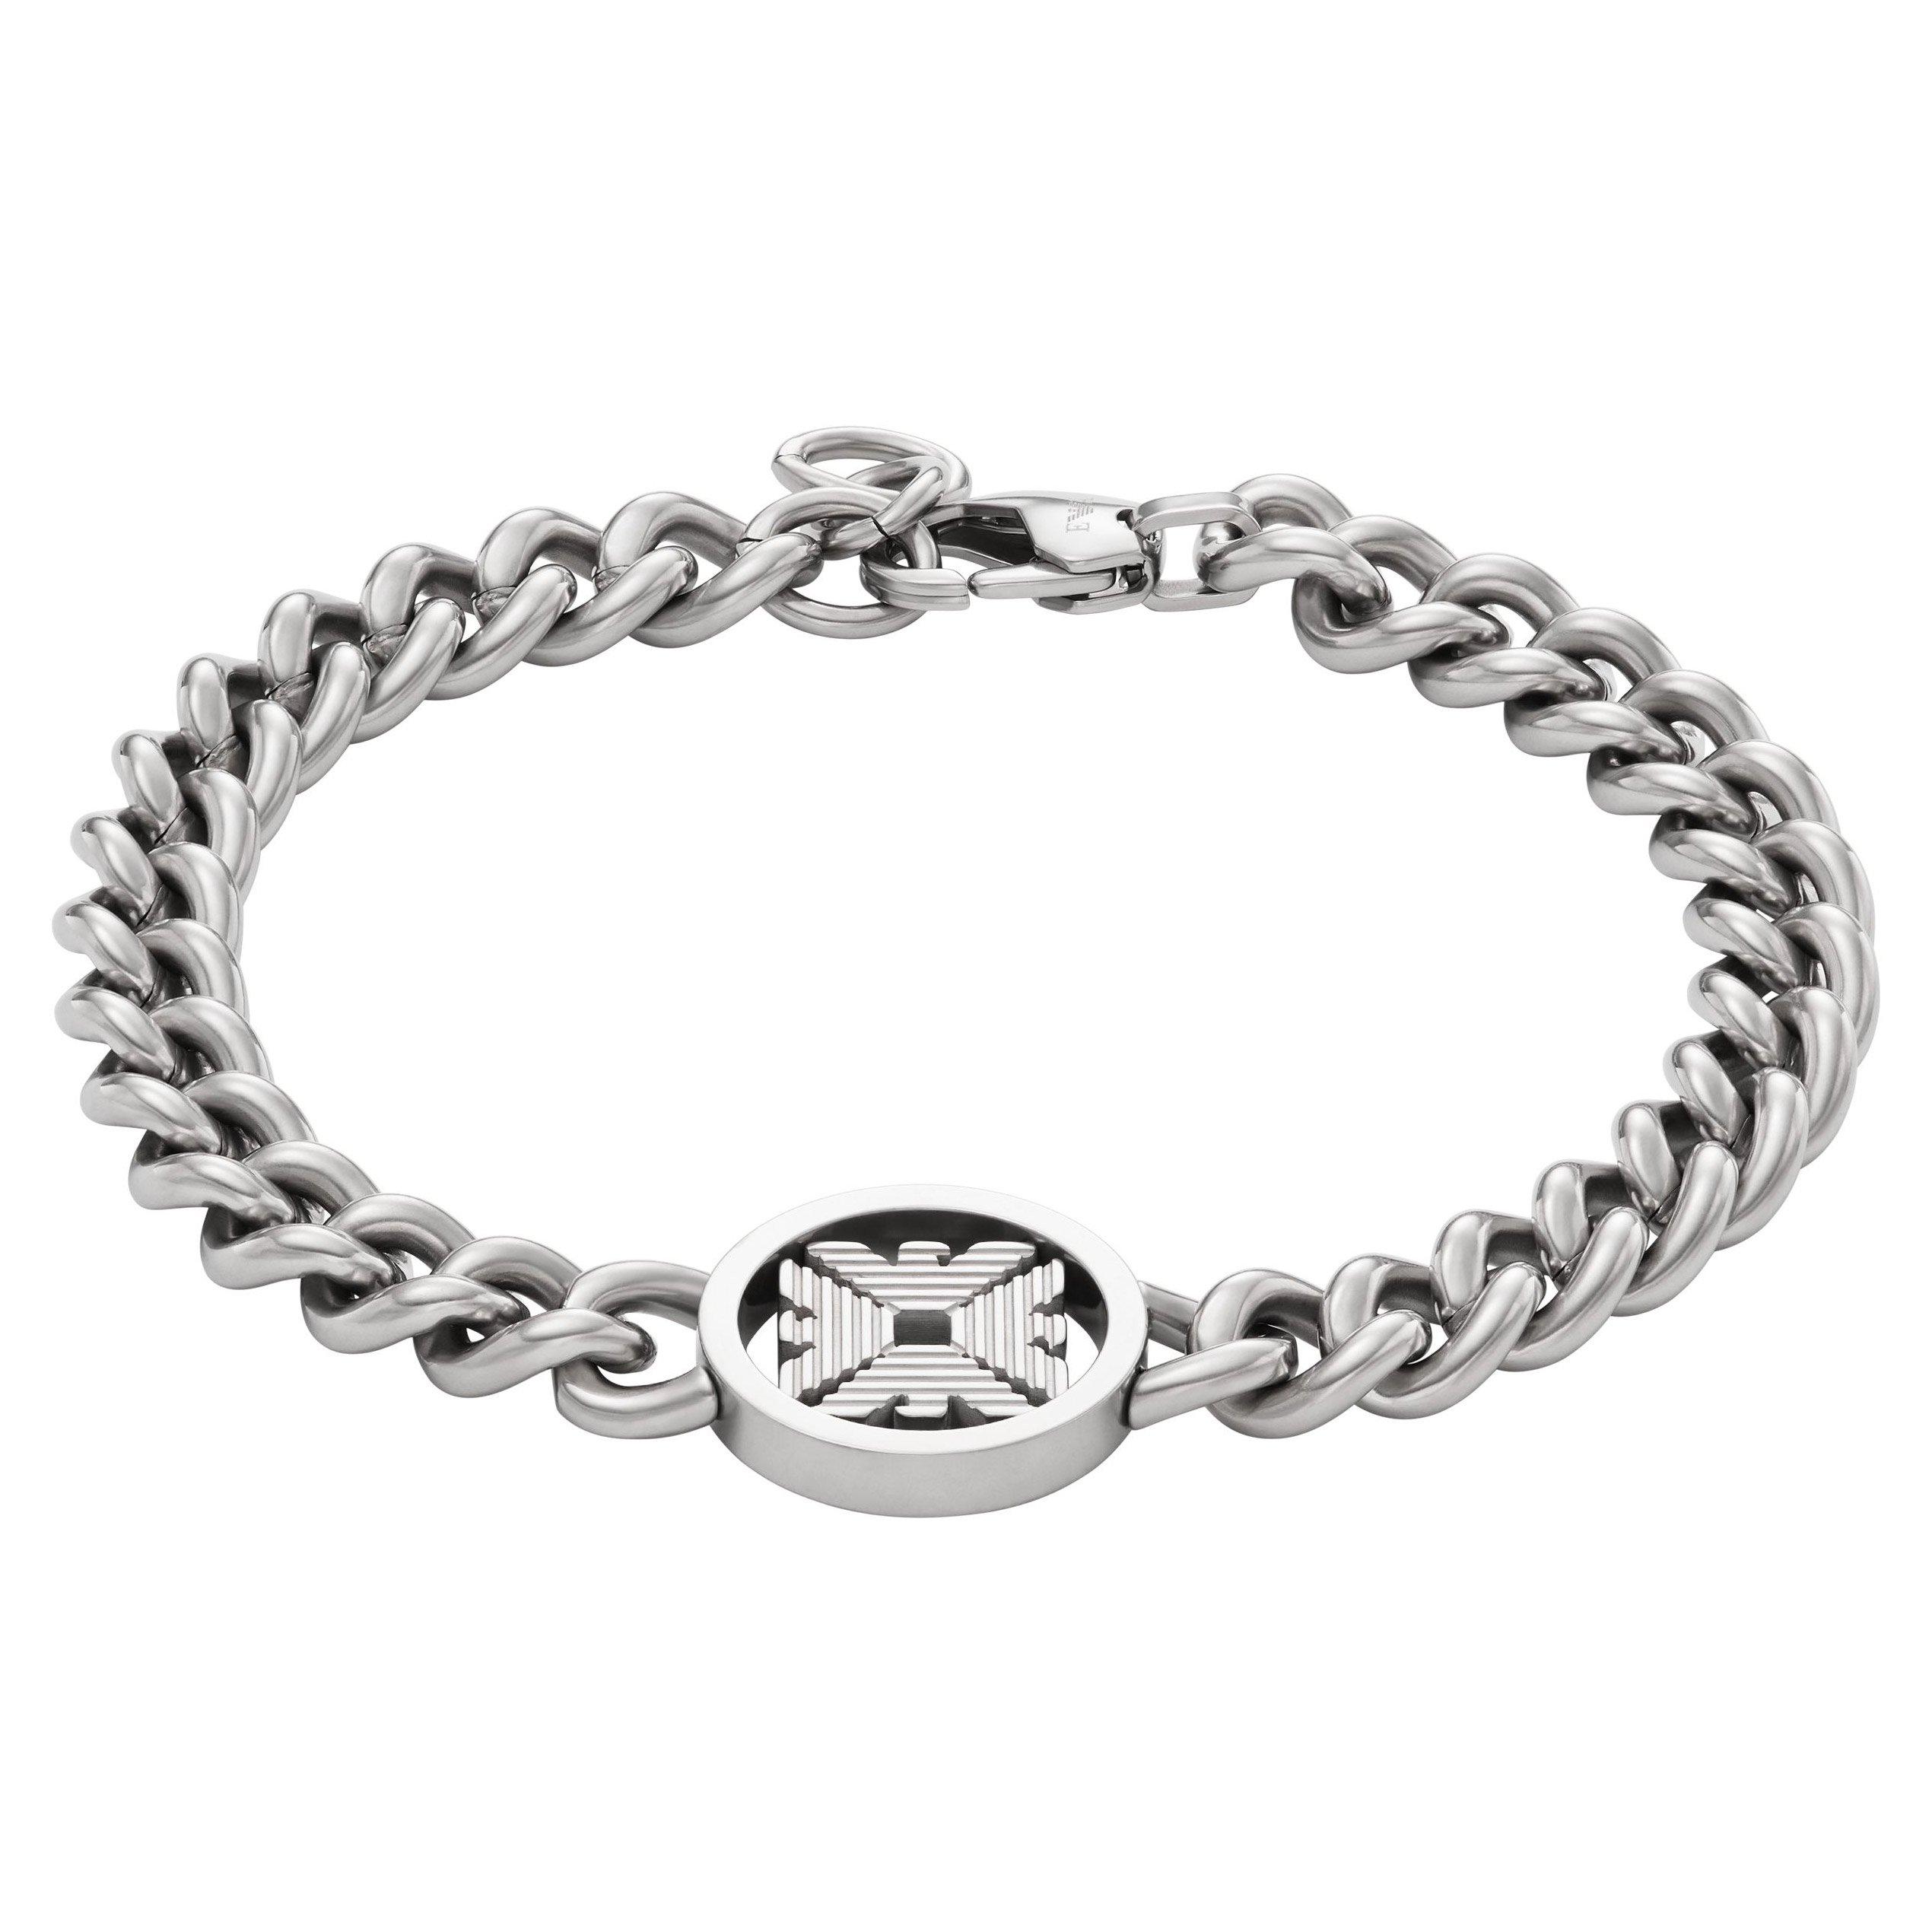 Emporio Armani Stainless Steel Bracelet | 0140345 | Beaverbrooks the ...